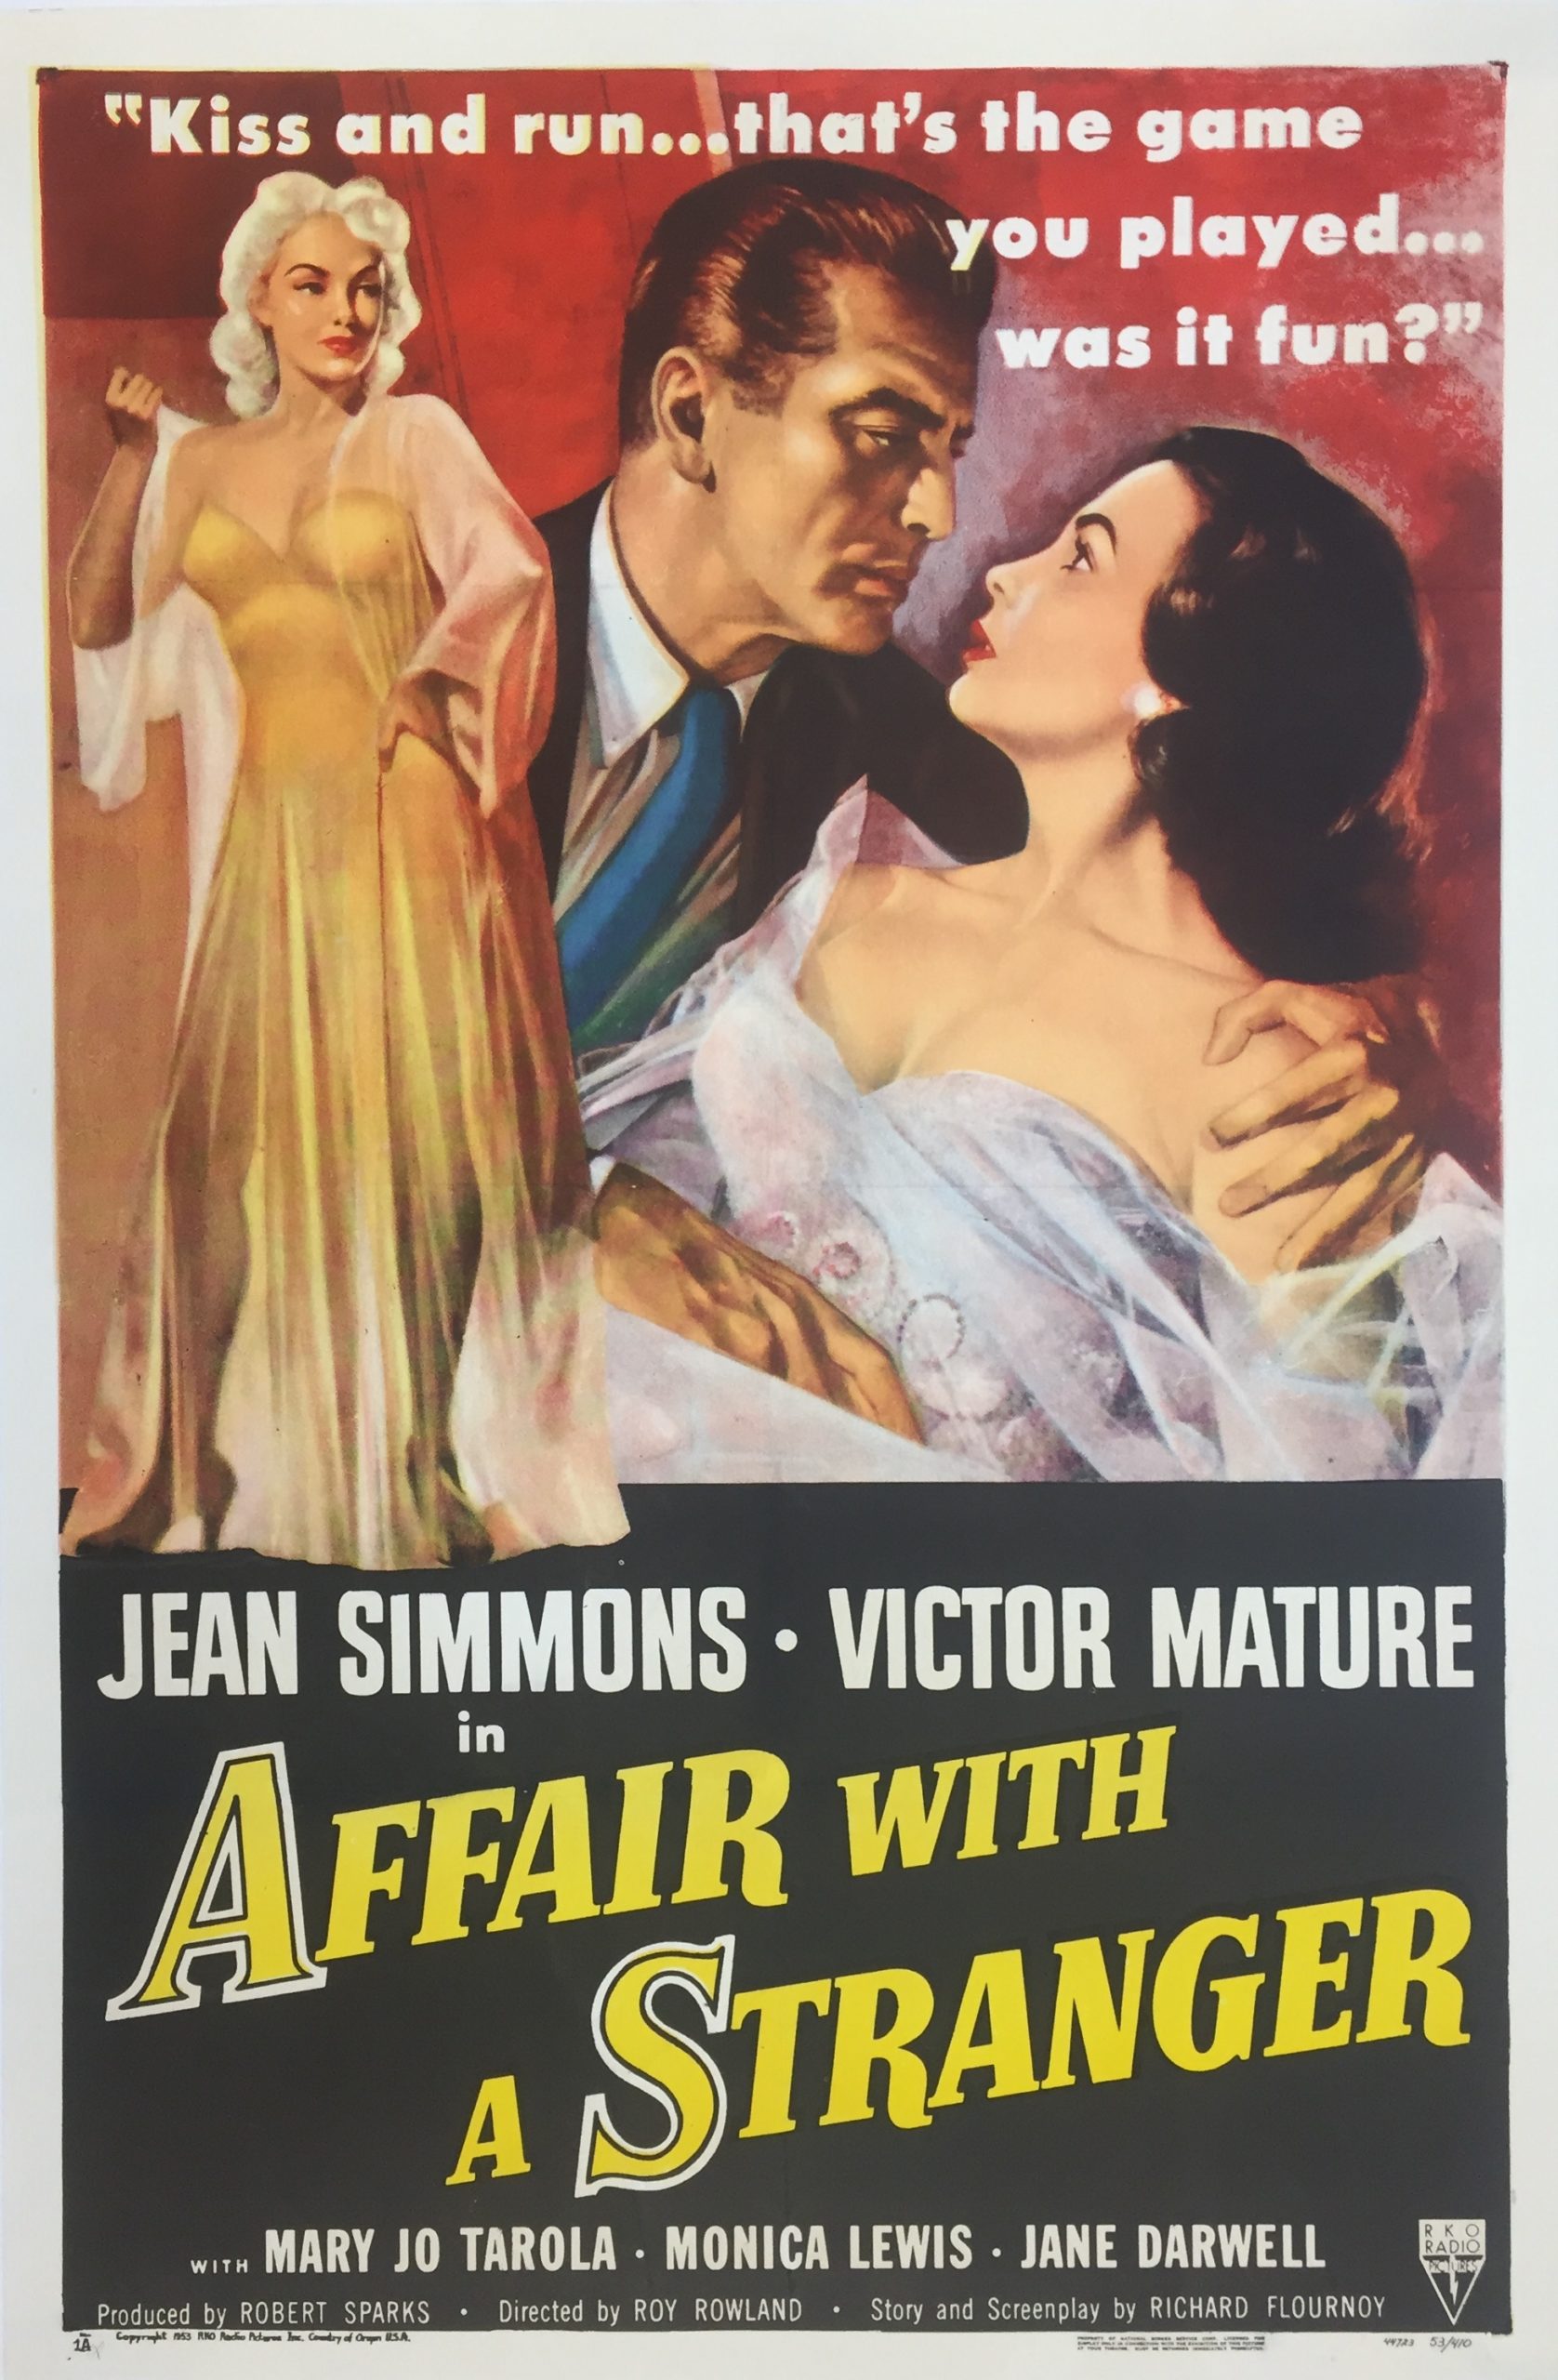 Original vintage US cinema movie poster for Affair With a Stranger